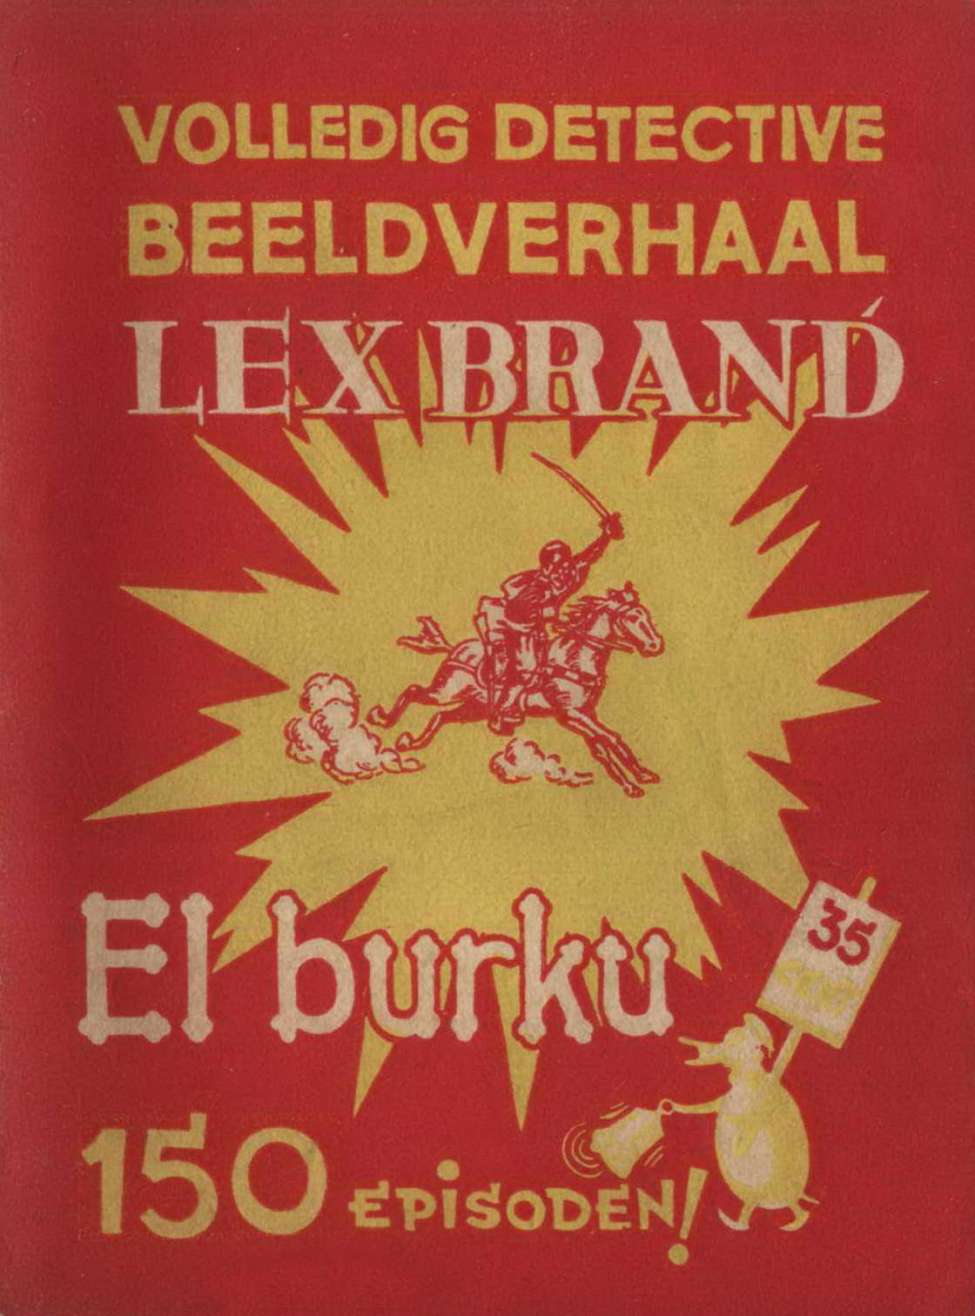 Book Cover For Lex Brand 8 - El Burku